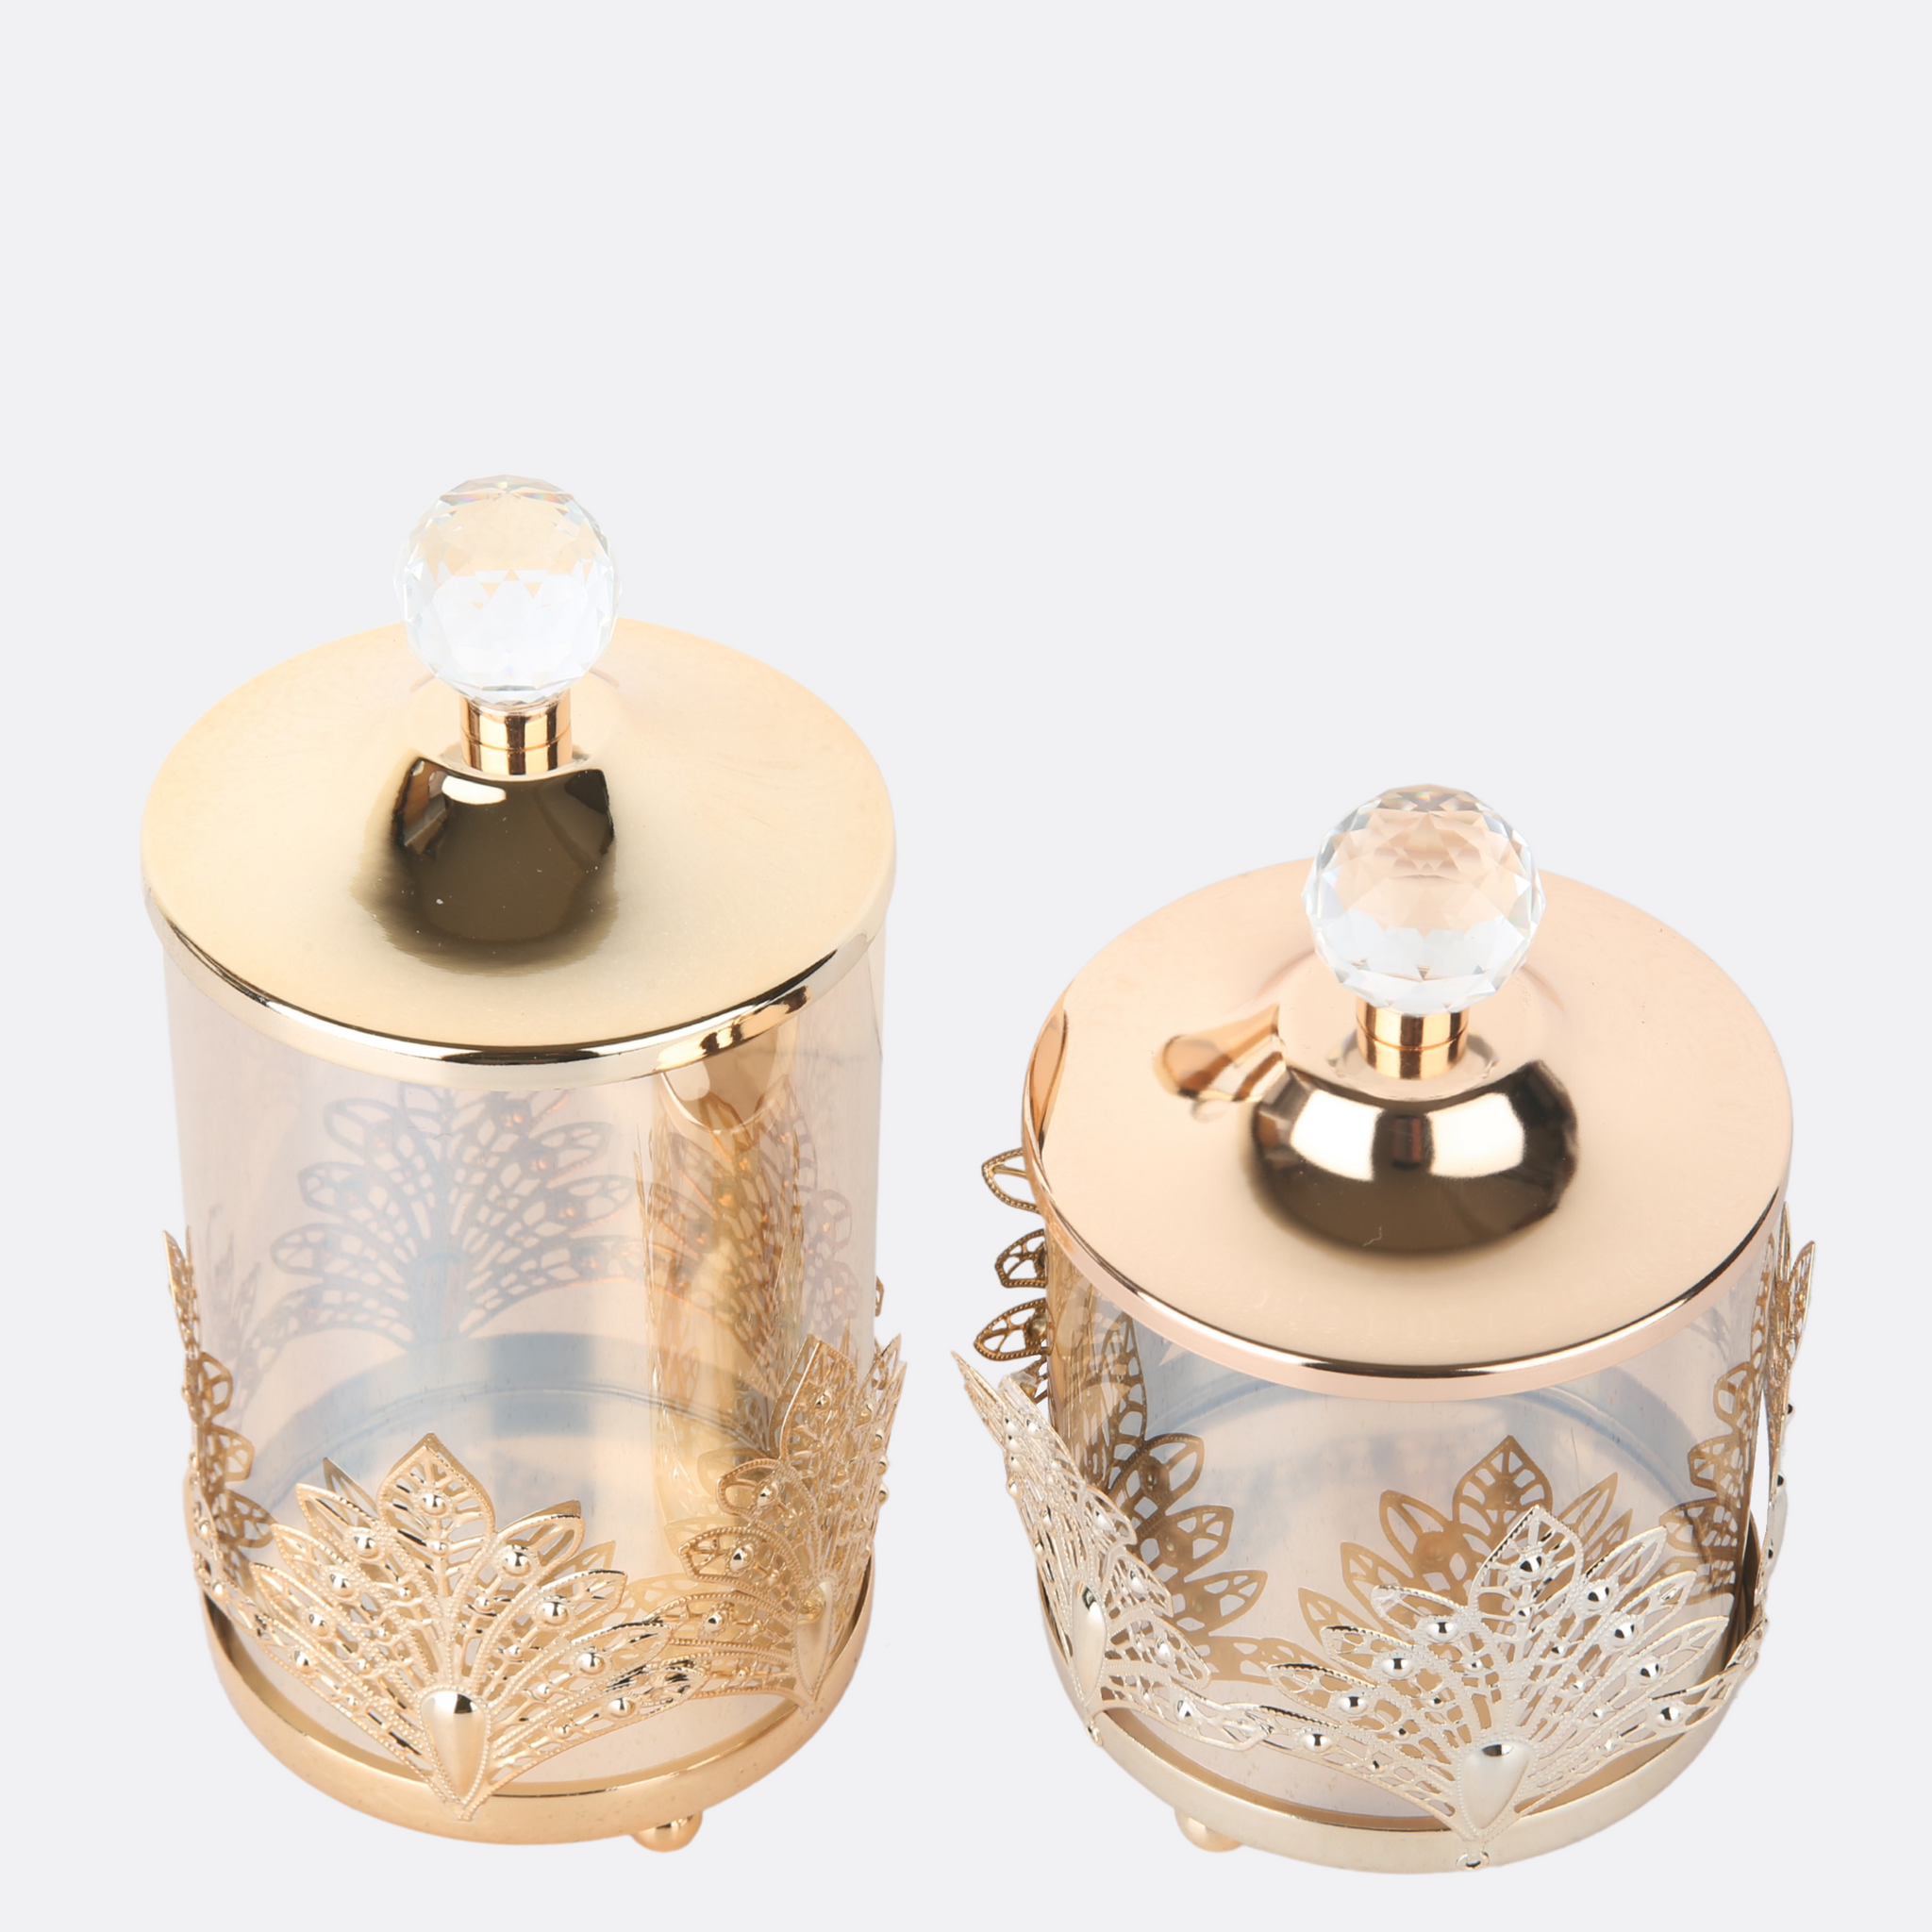 Glass Candy Jars With Metallic Base (Set o 2)